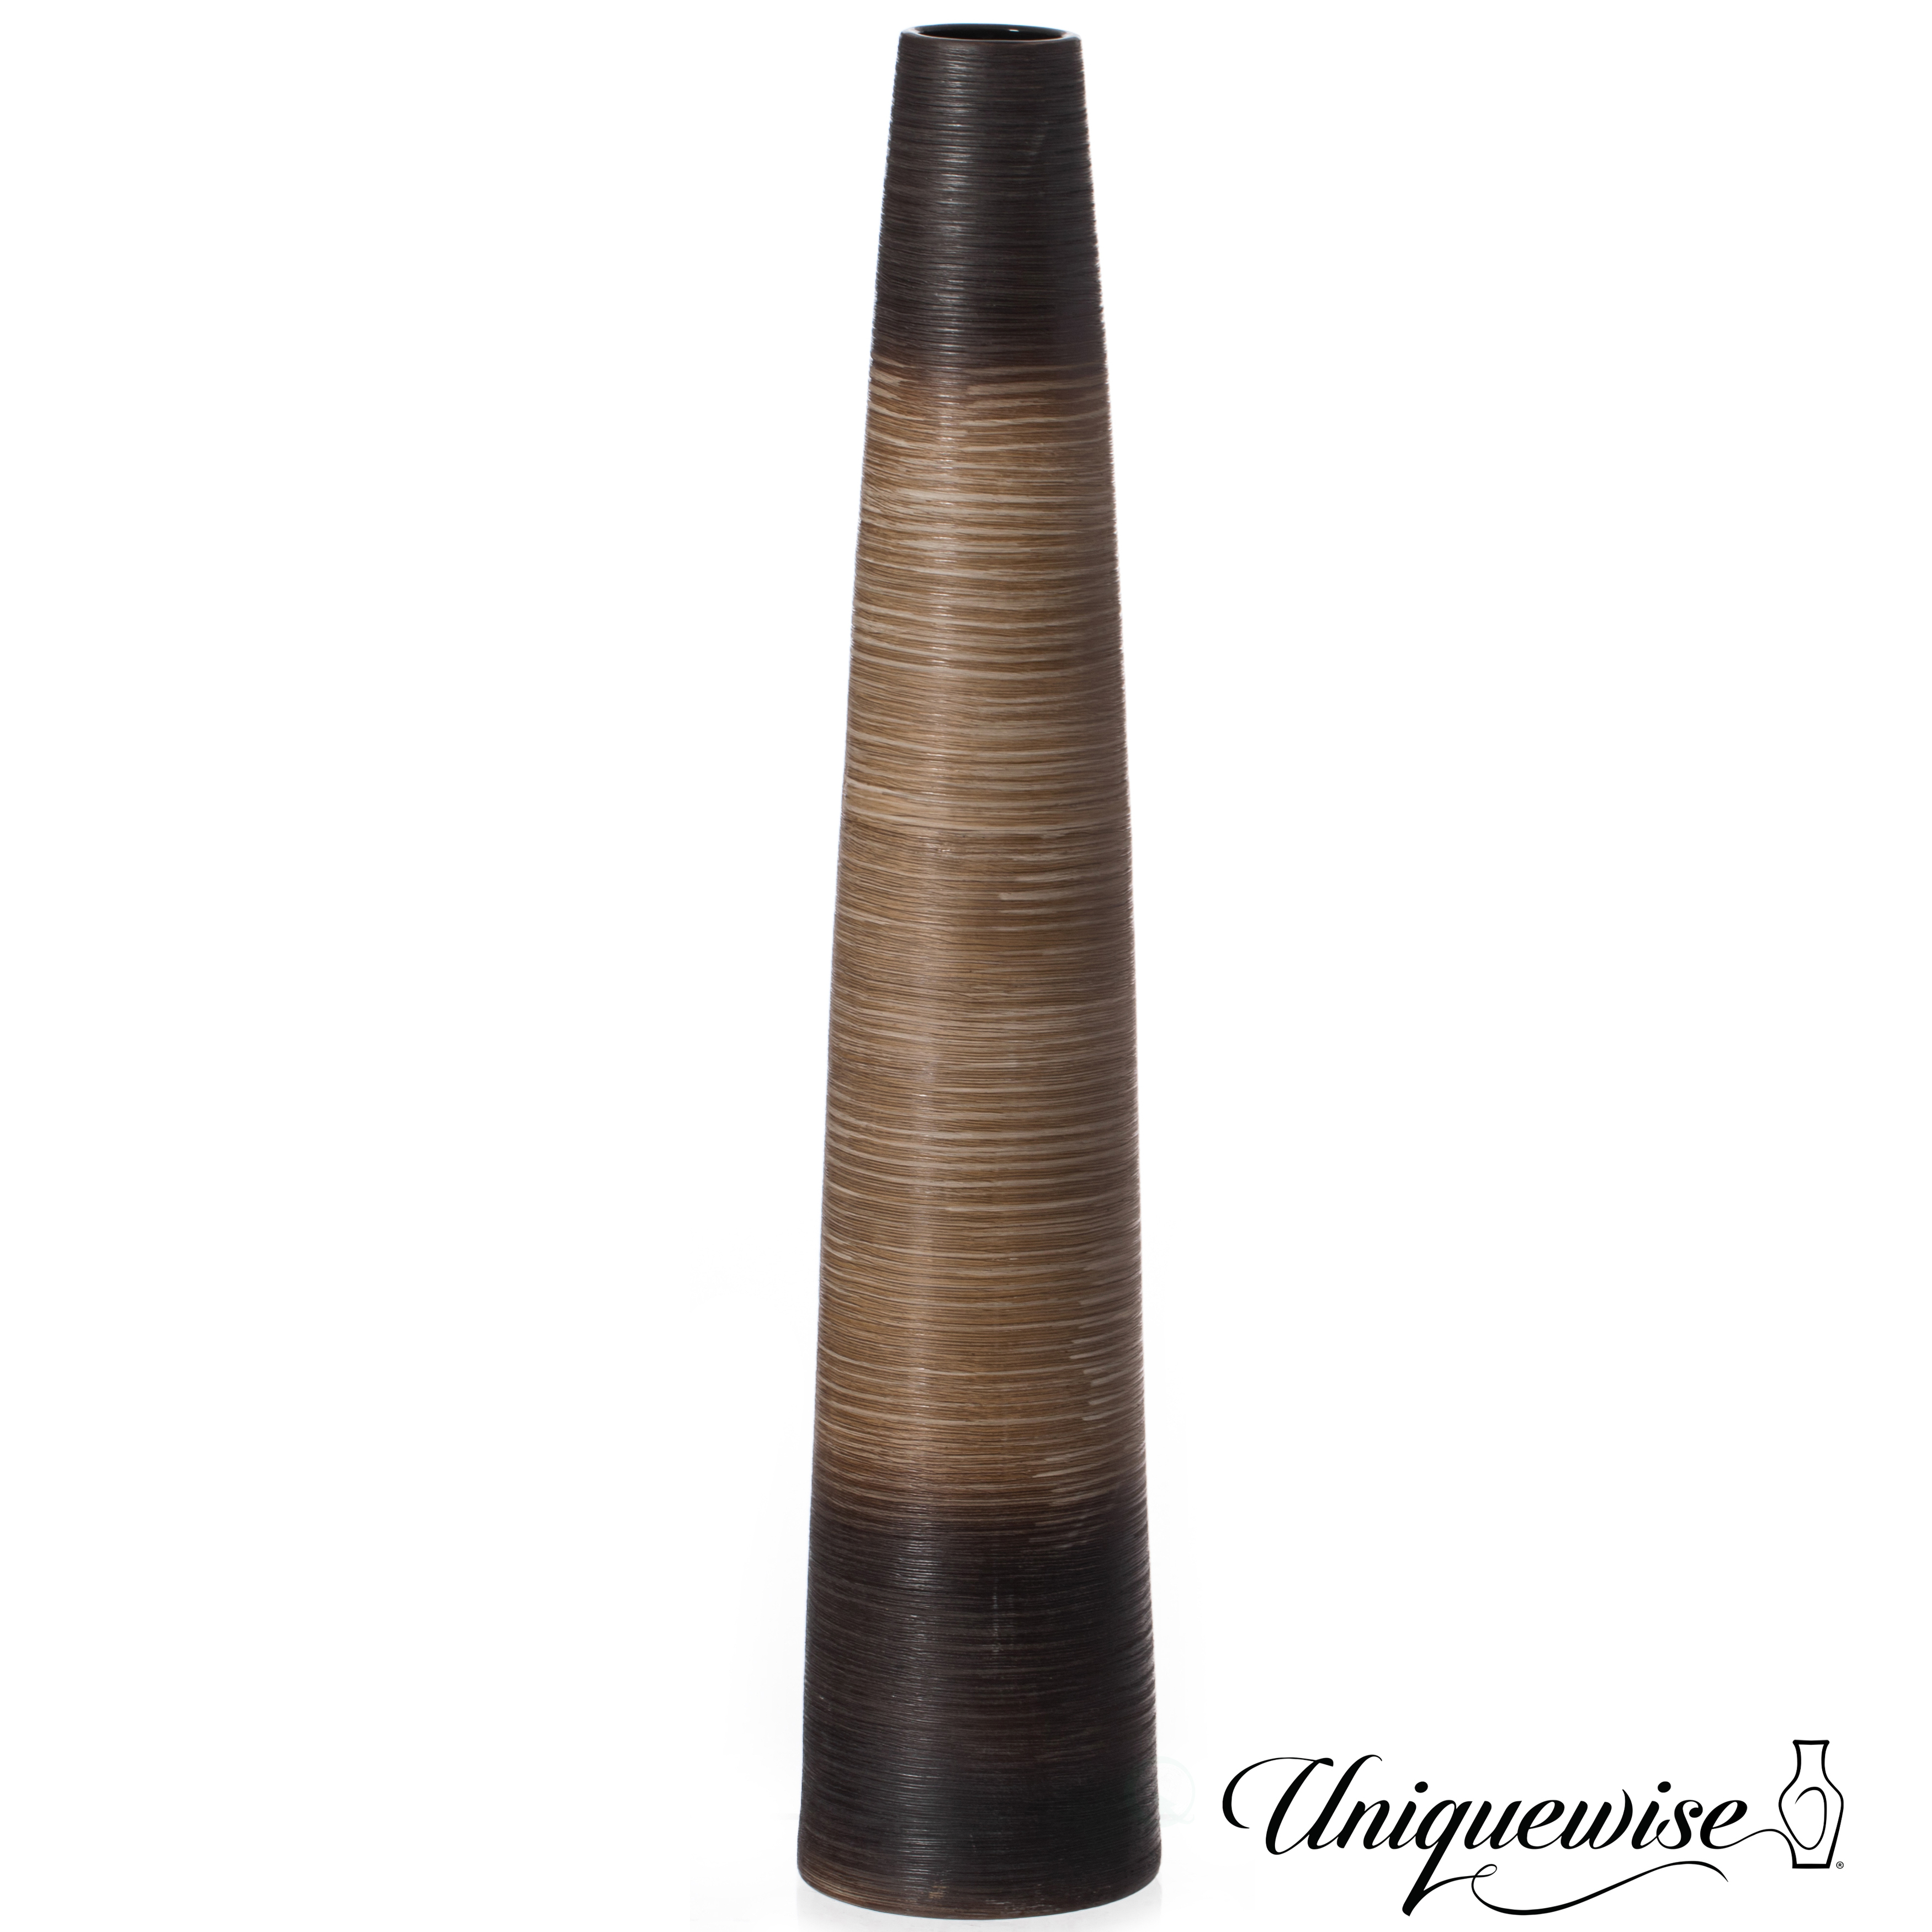 Tall Handcrafted Brown Ceramic Floor Vase - Waterproof Cylinder-Shaped Freestanding Design, Ideal For Tall Floral Arrangements - Set Of 3